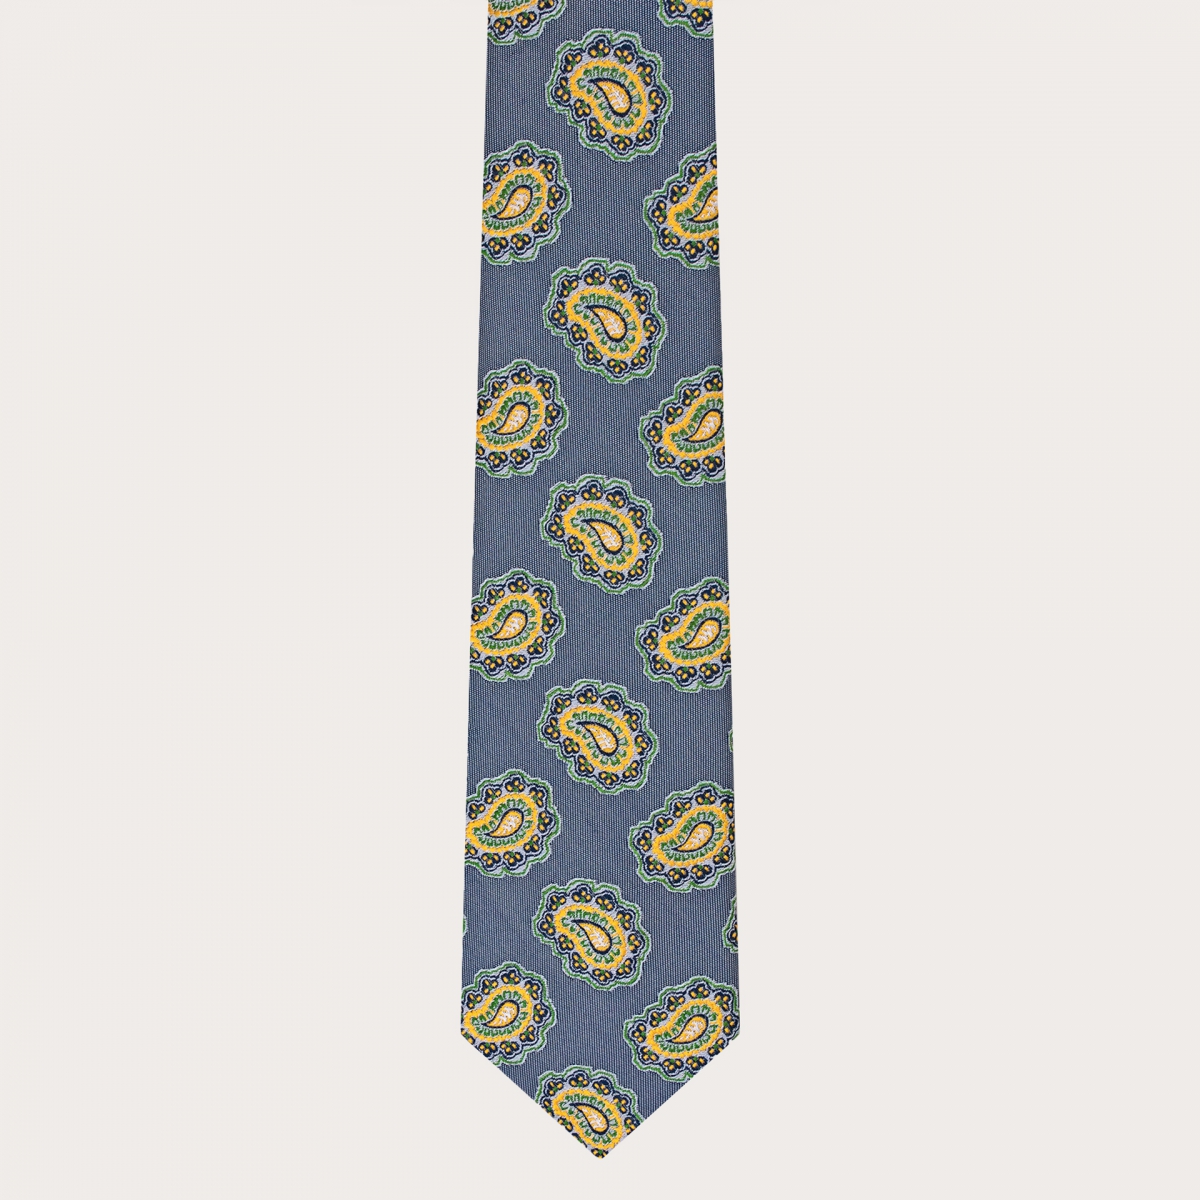 Bretelle e cravatta coordinate in seta, fantasia paisley blu navy